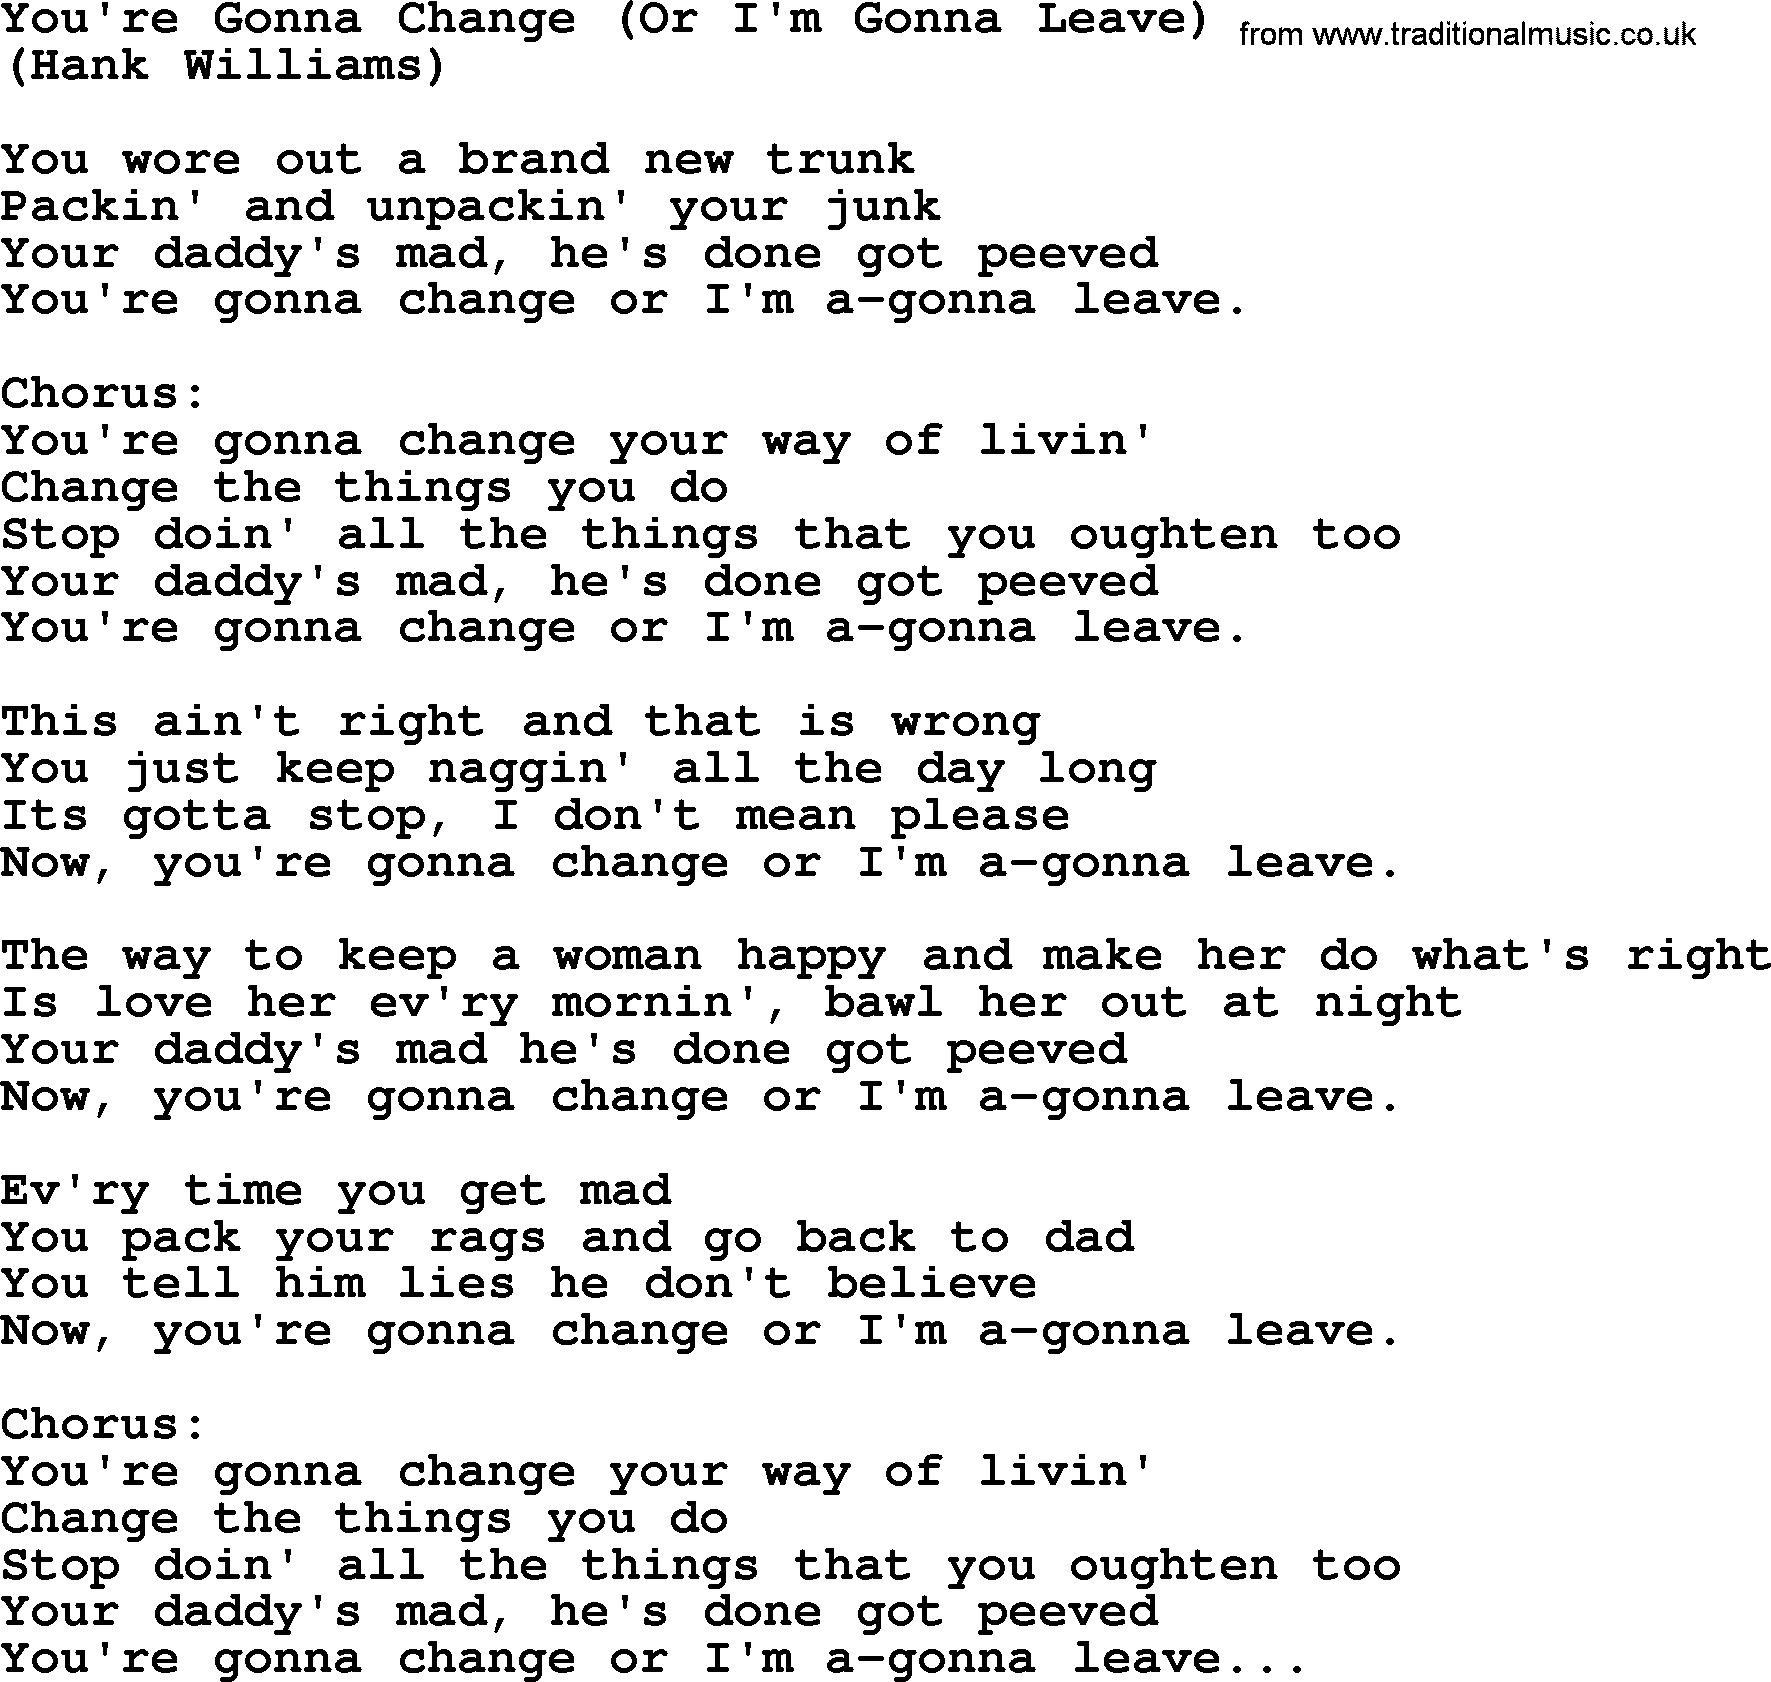 Hank Williams song You're Gonna Change (or I'm Gonna Leave), lyrics